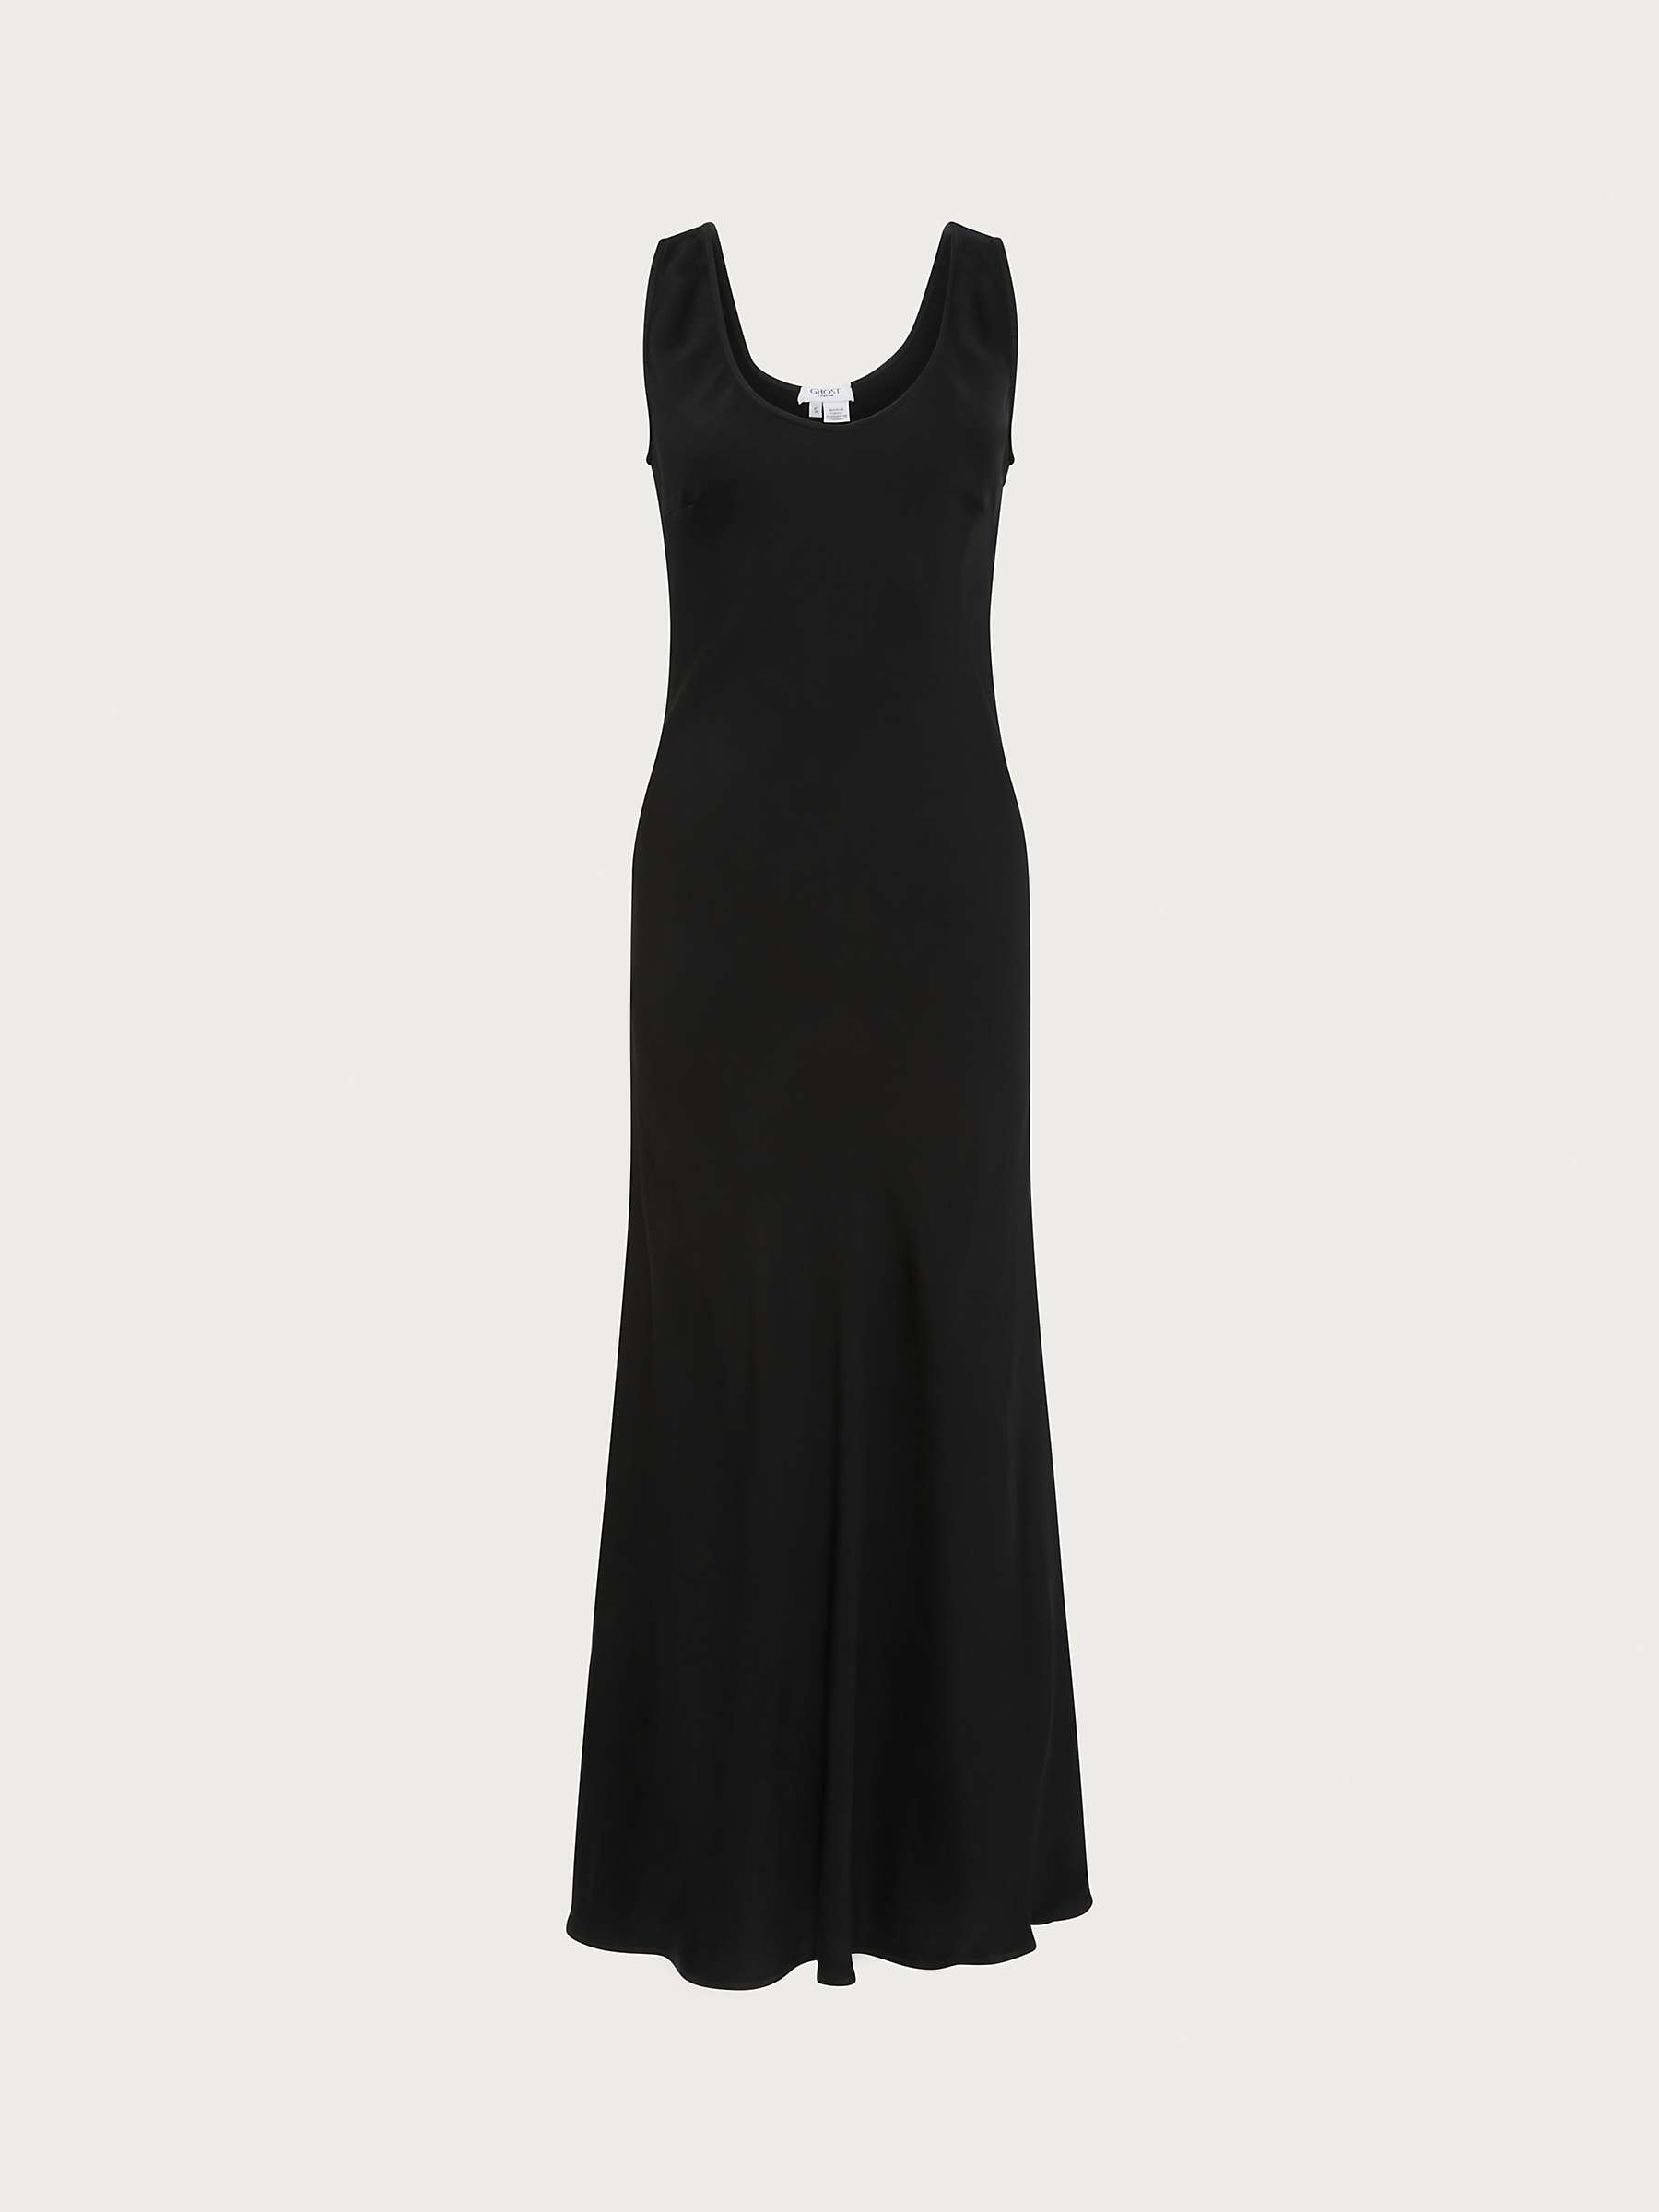 Ghost Palm Bias Cut Satin Slip Dress, Black at John Lewis & Partners